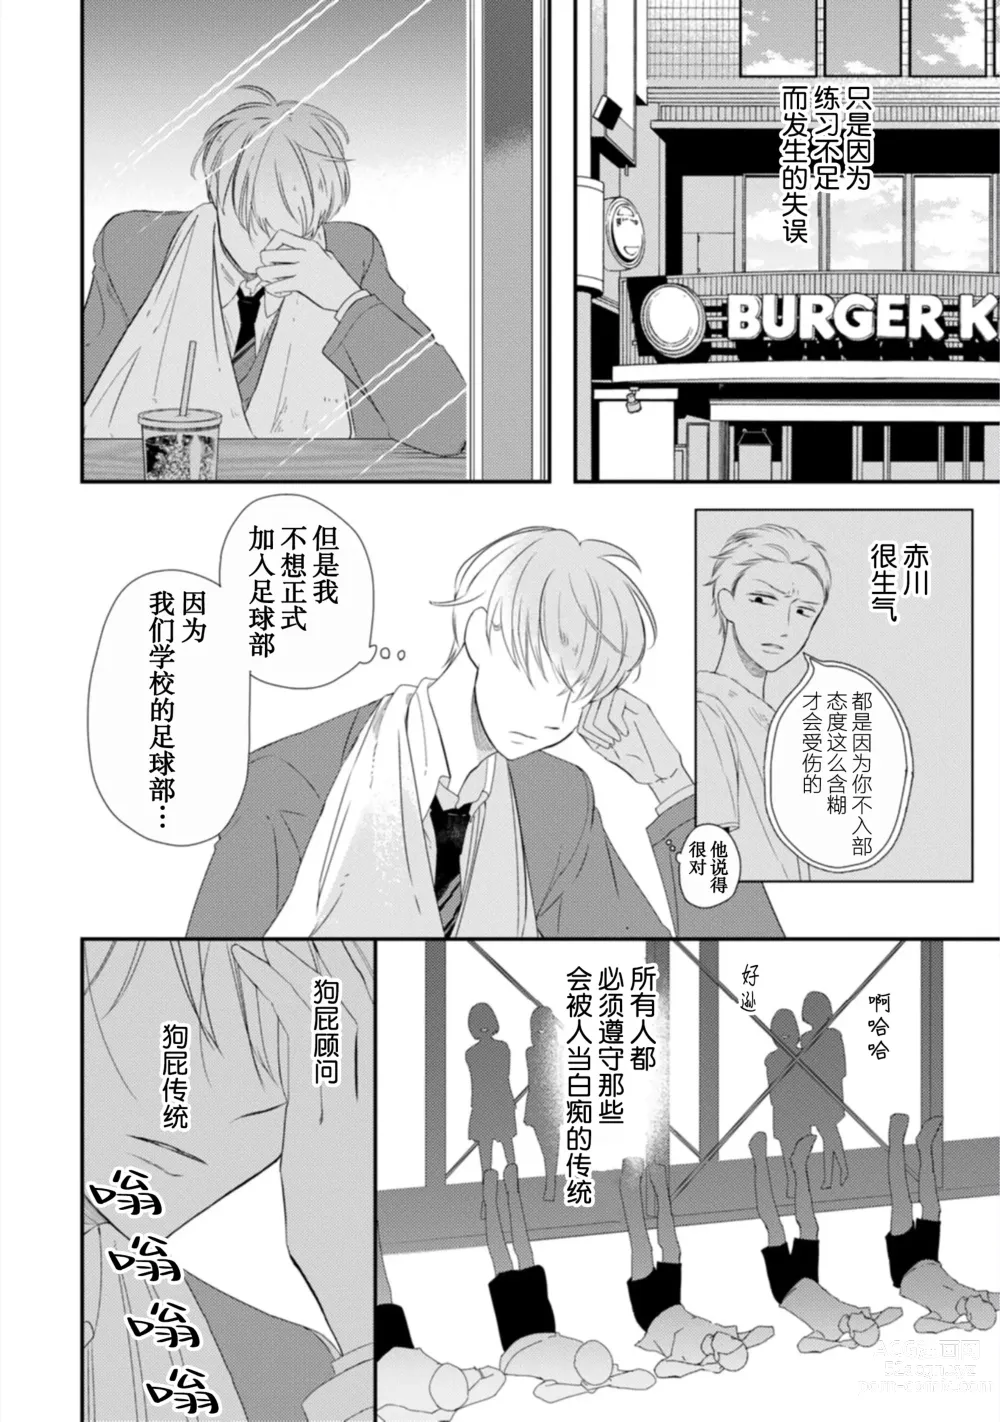 Page 18 of manga 渴望褪下制服